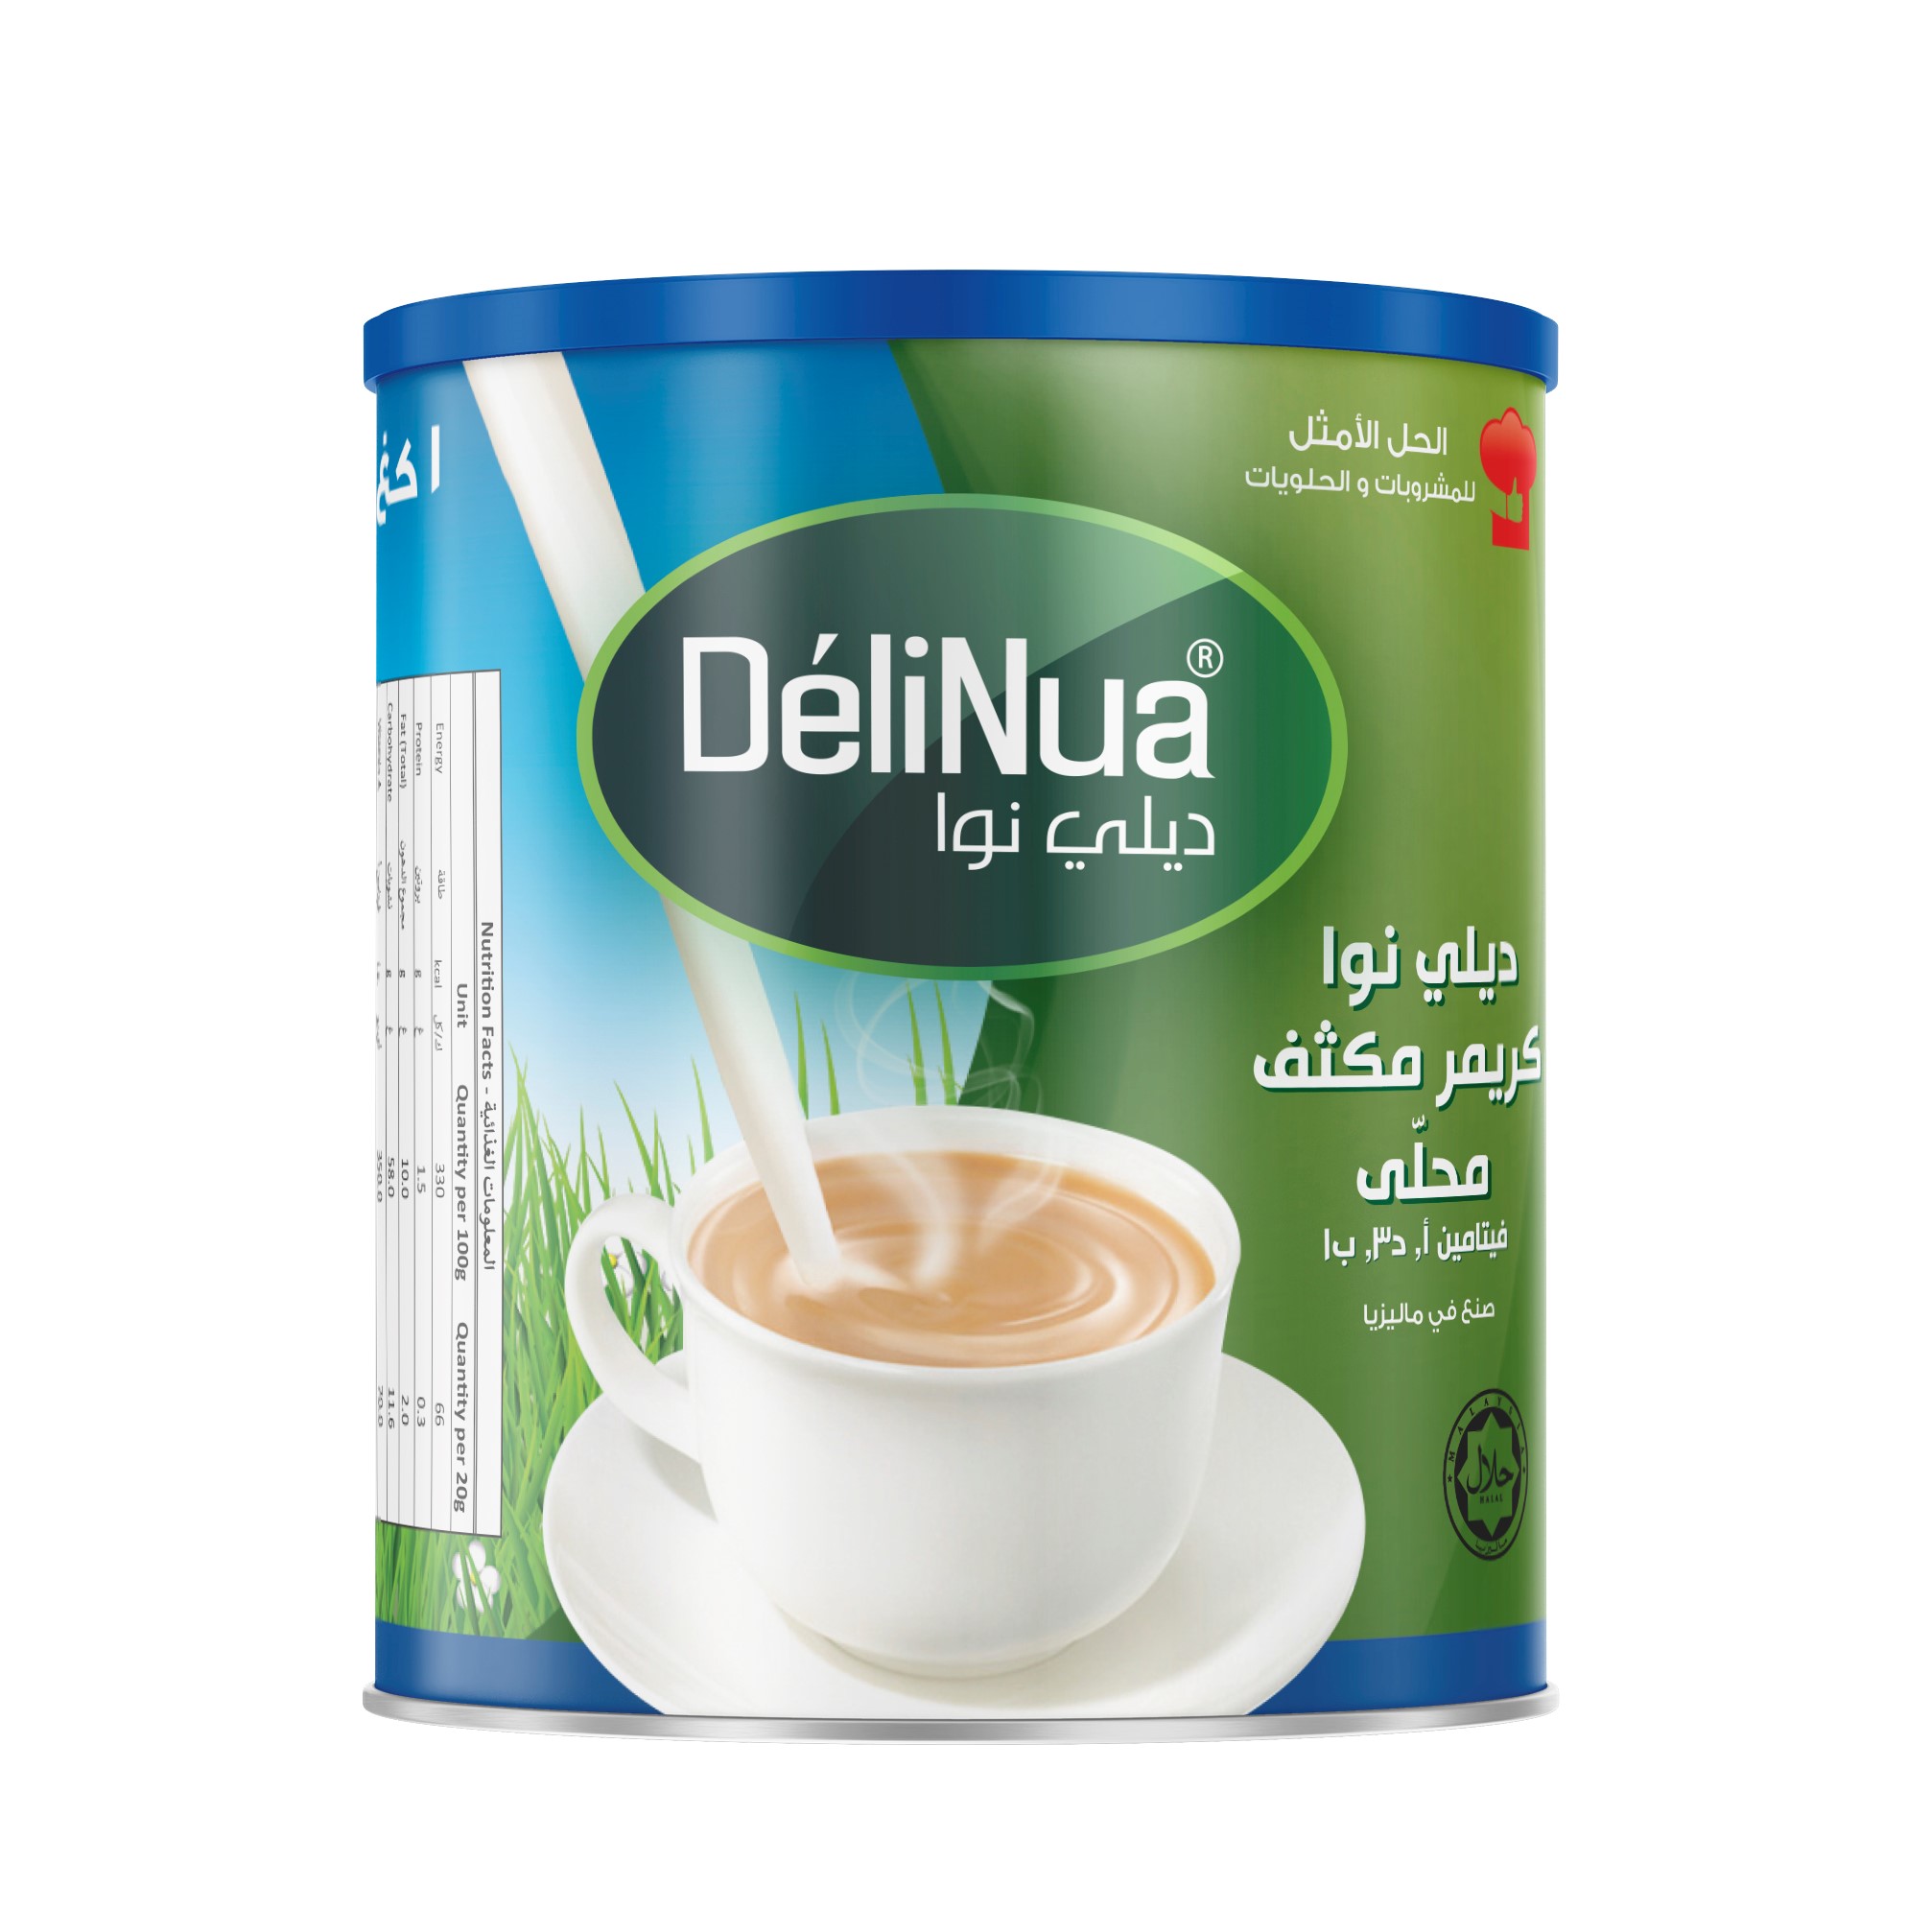 DeliNua Sweetened Condensed Milk (Creamer) 1 Kg.